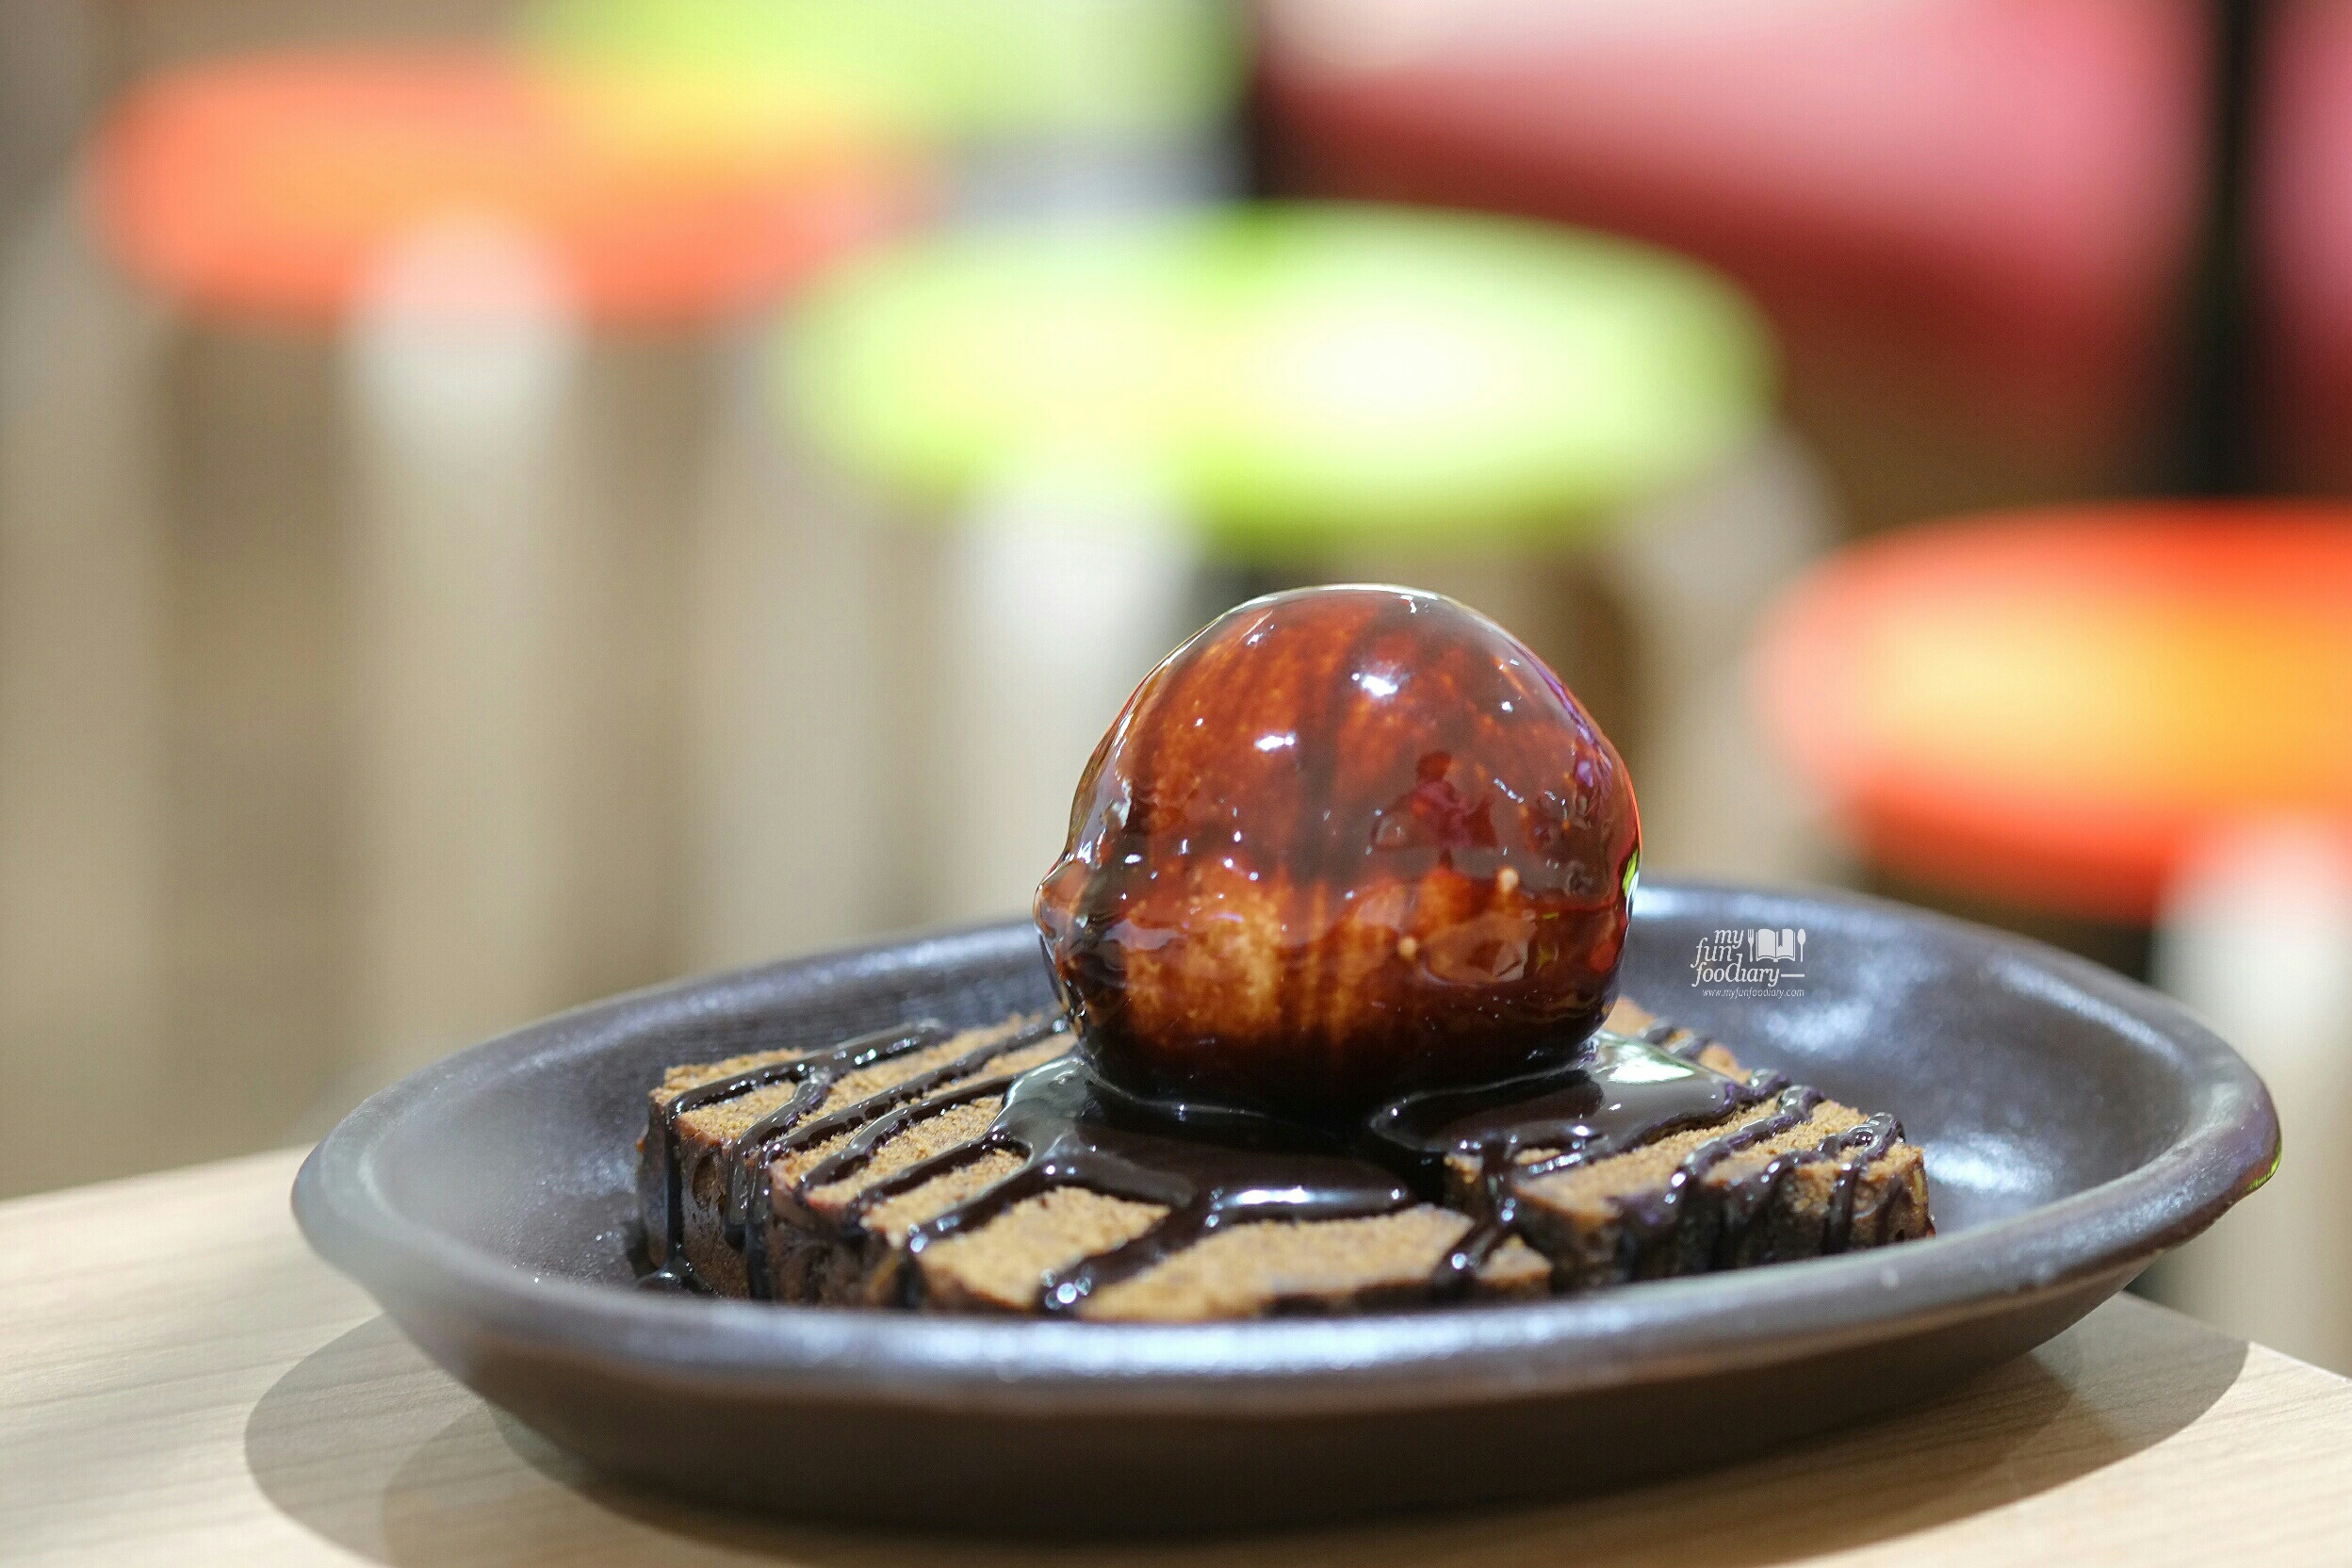 Choco Fondue Brownies at Aree Korean Dessert Cafe by Myfunfoodiary